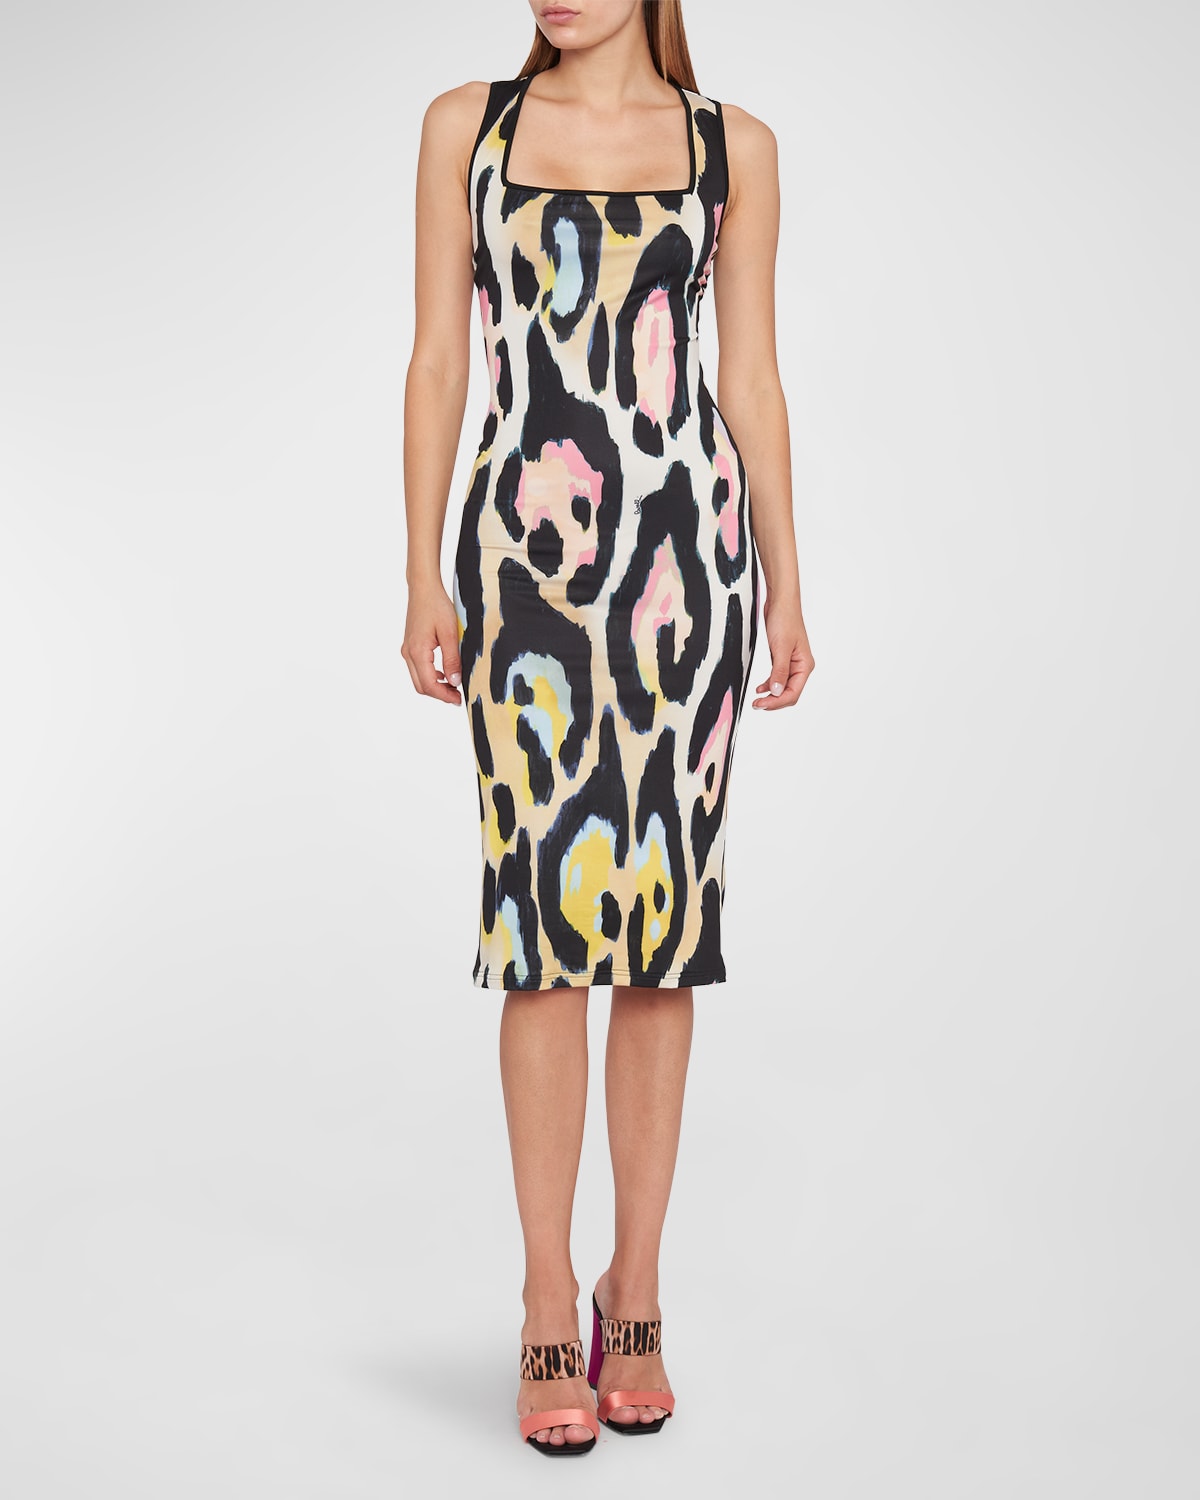 leopard print fitted dress, Dolce & Gabbana